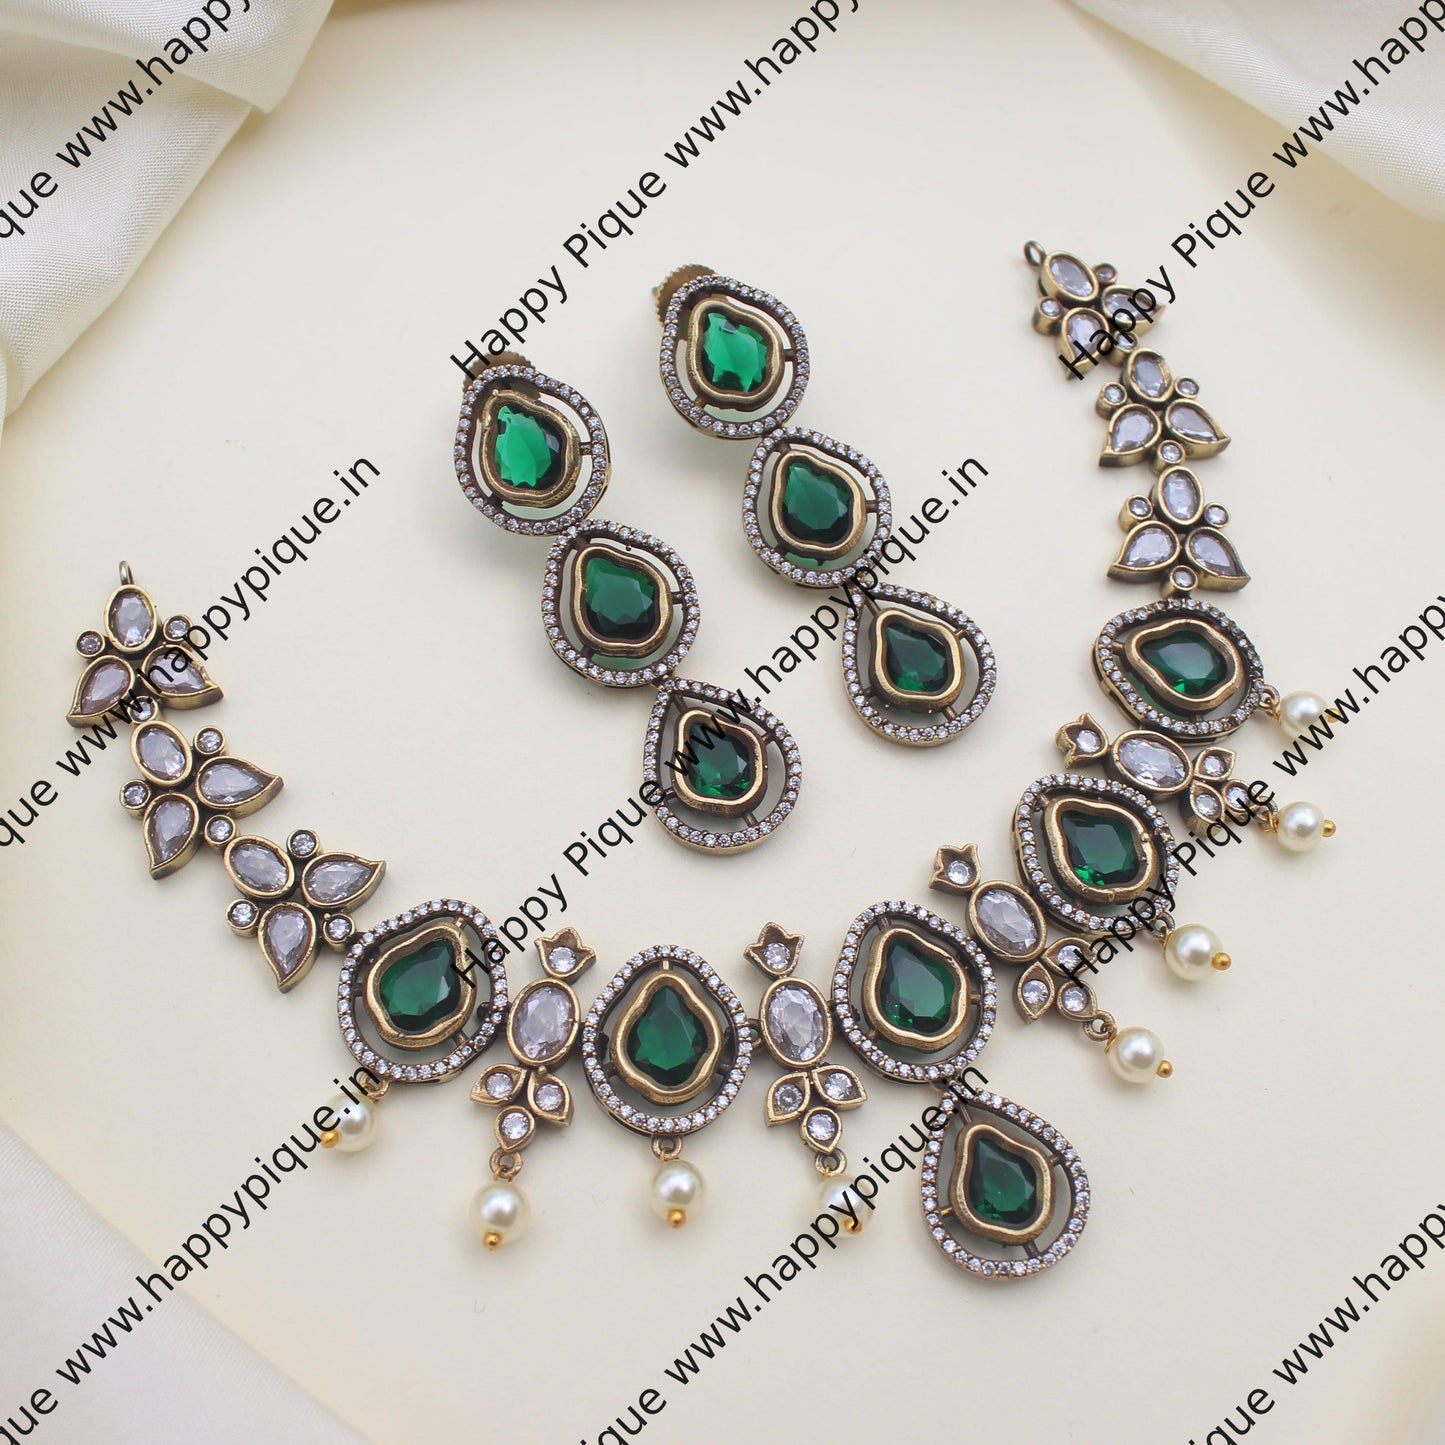 Victorian AD Bridal Necklace Set - Emerald